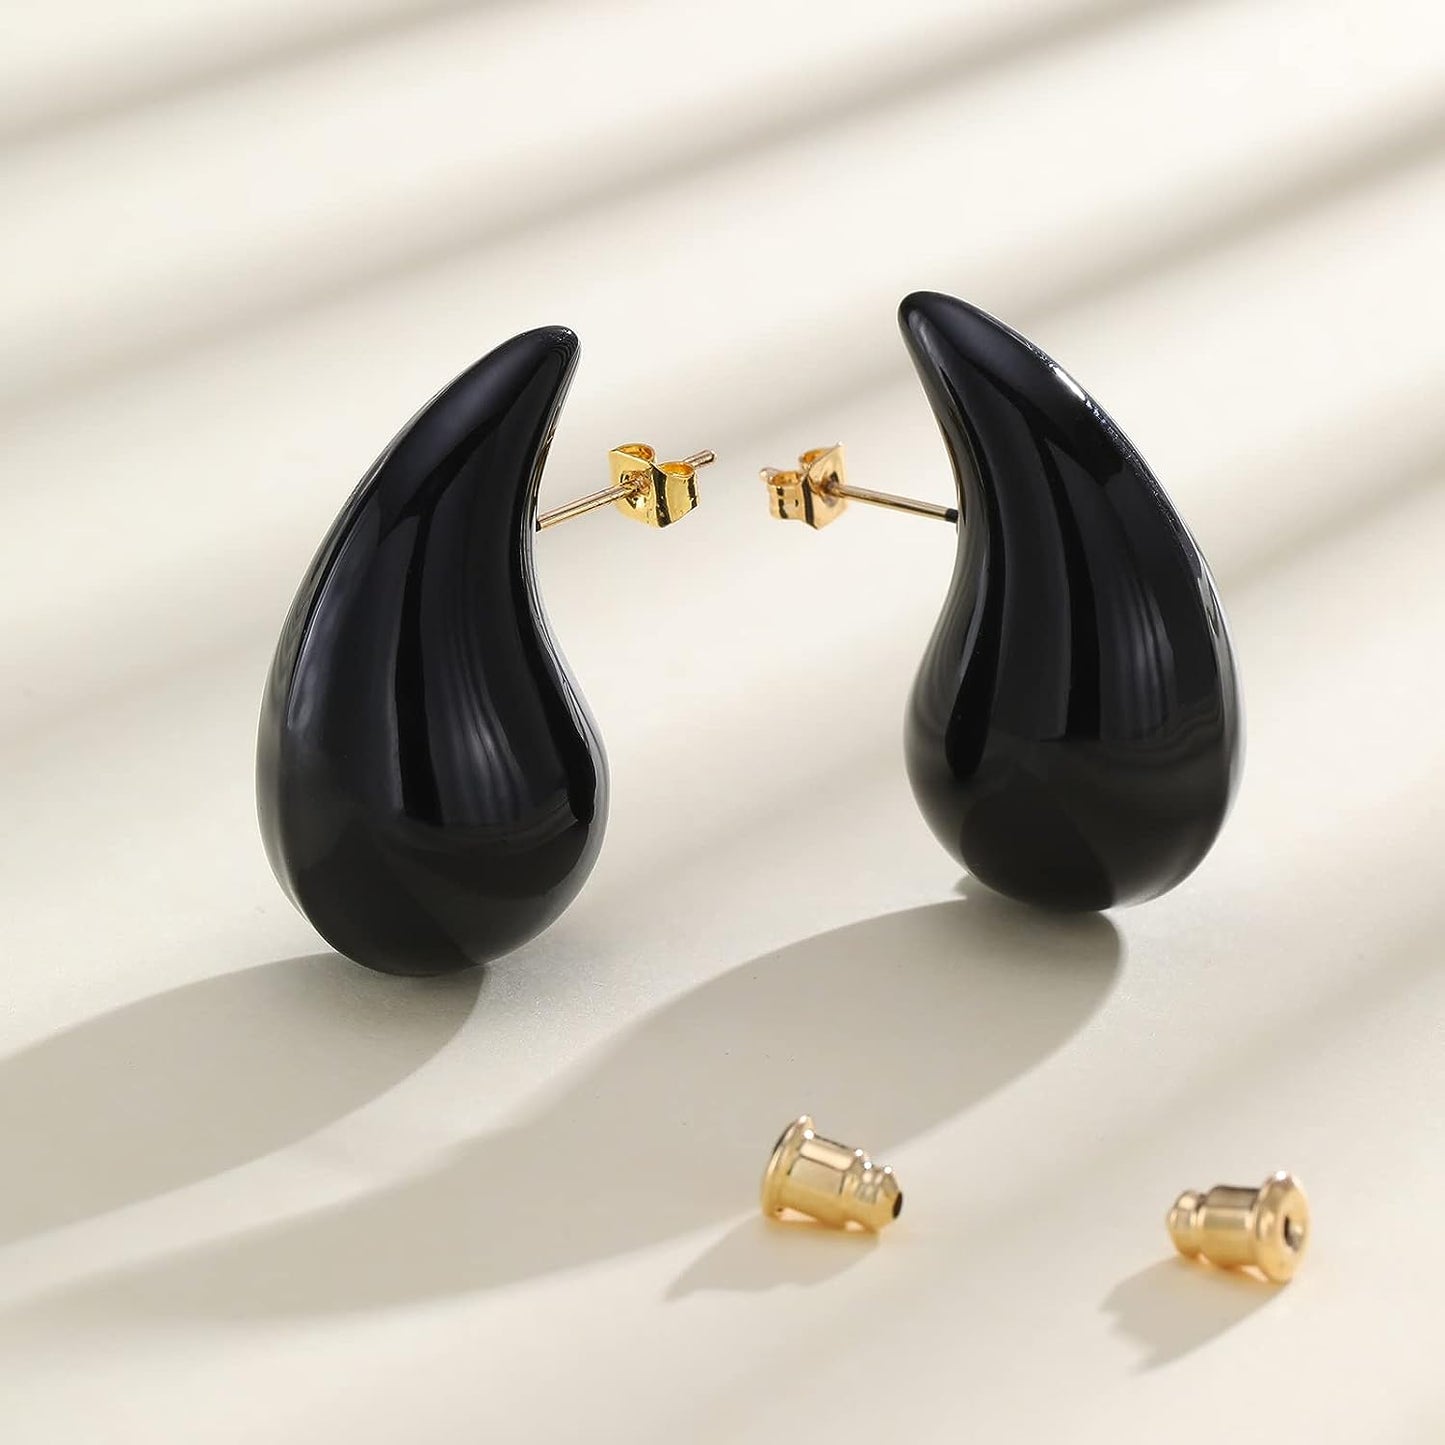 Chunky Gold Earrings for Women, Dupes Earrings Lightweight Waterdrop Hollow Open Hoops, Hypoallergenic Gold Plated Earrings Fashion Jewelry for Women Girls